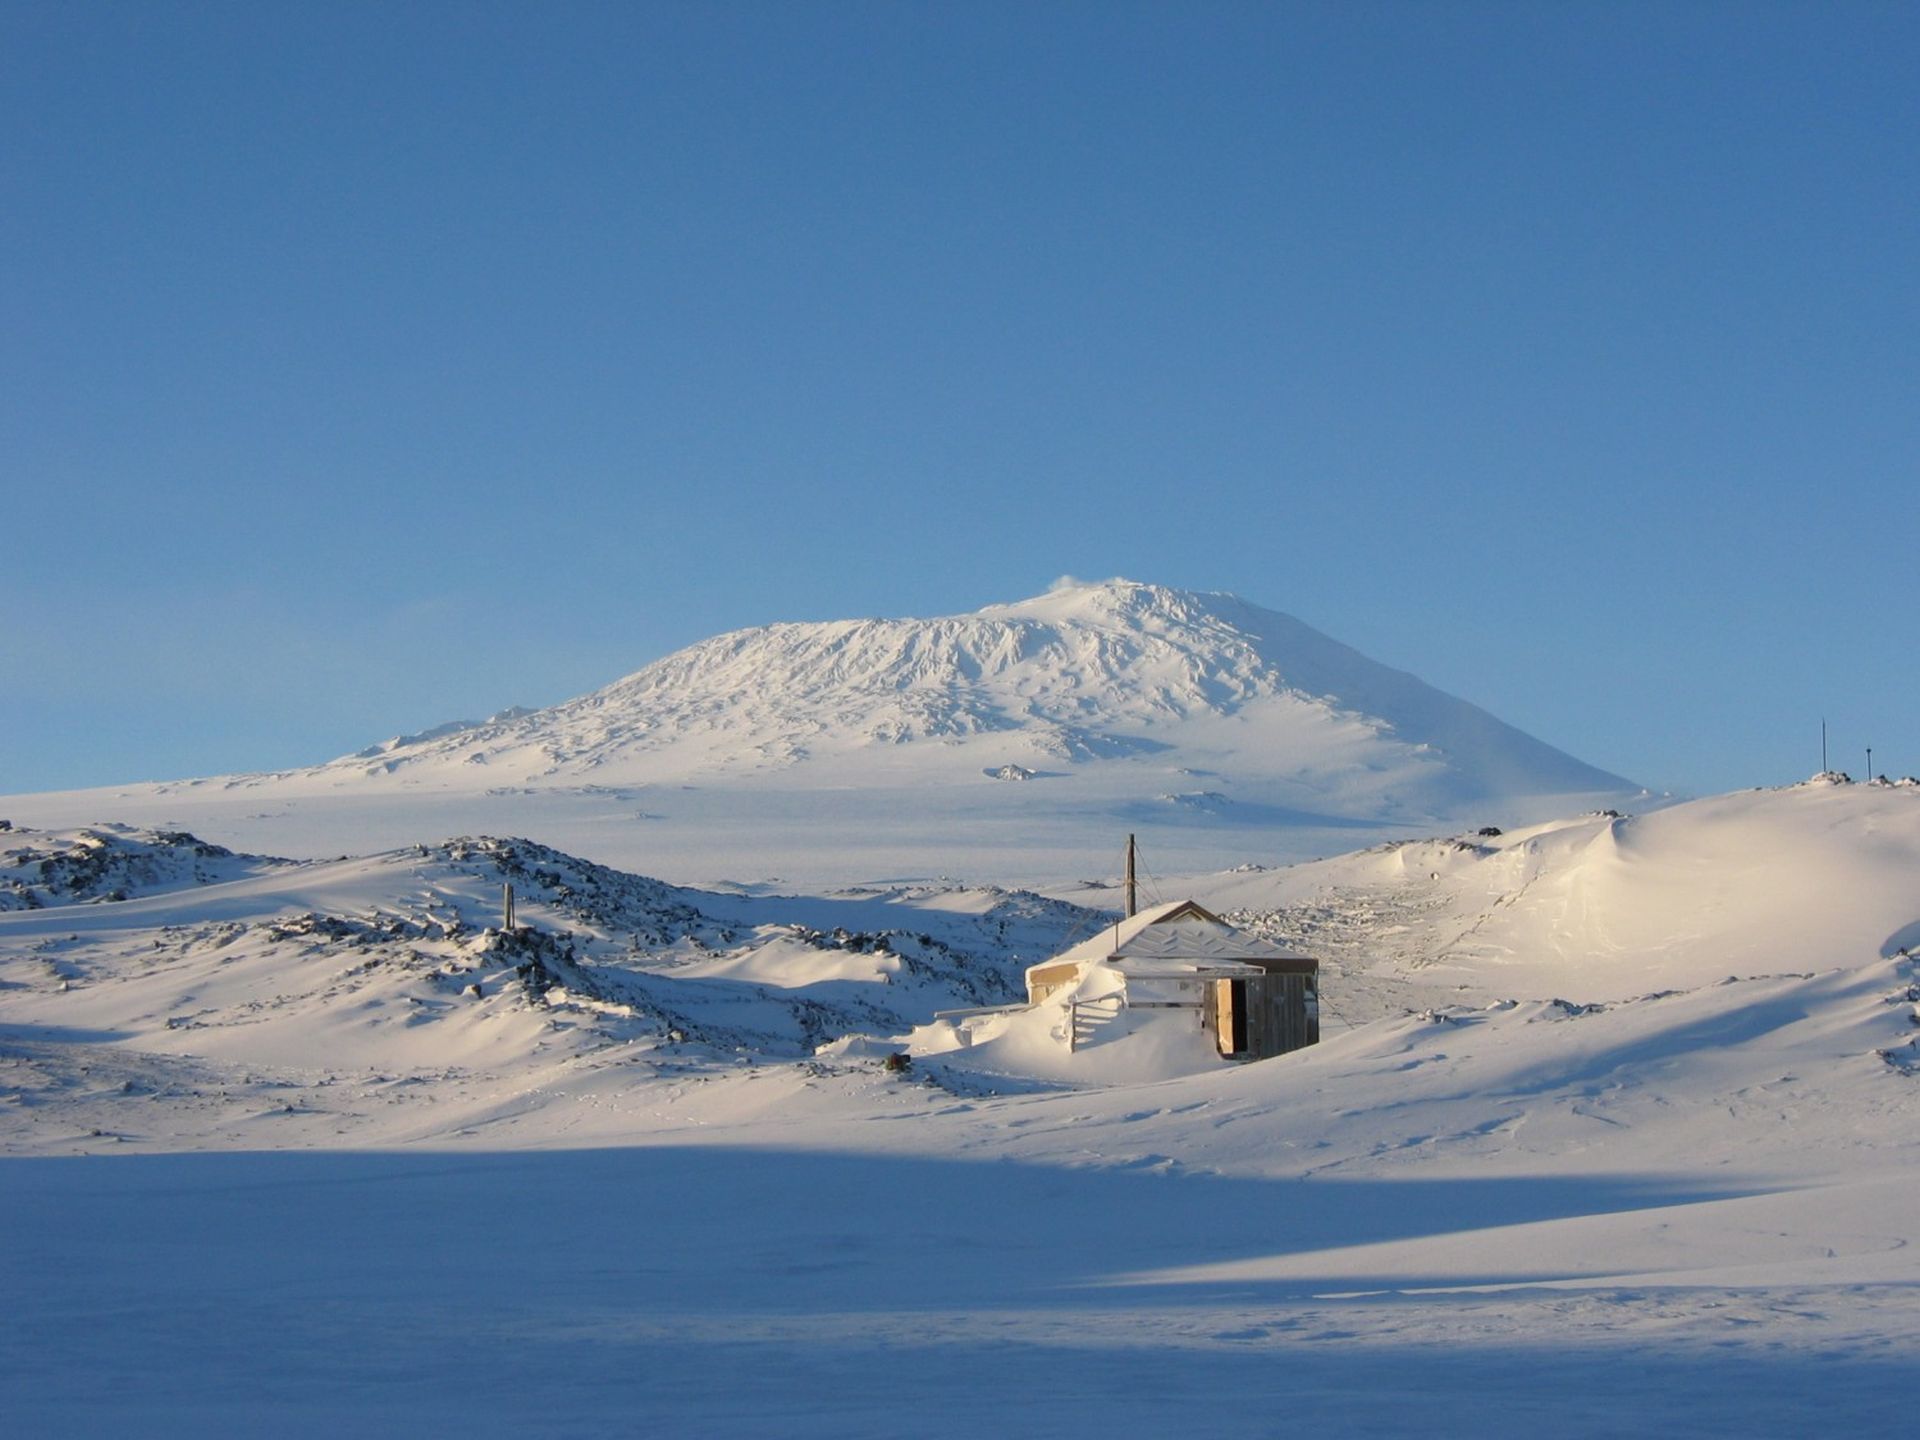 Shackleton's hut at Cape Royds, Ross Island, Antarctica.